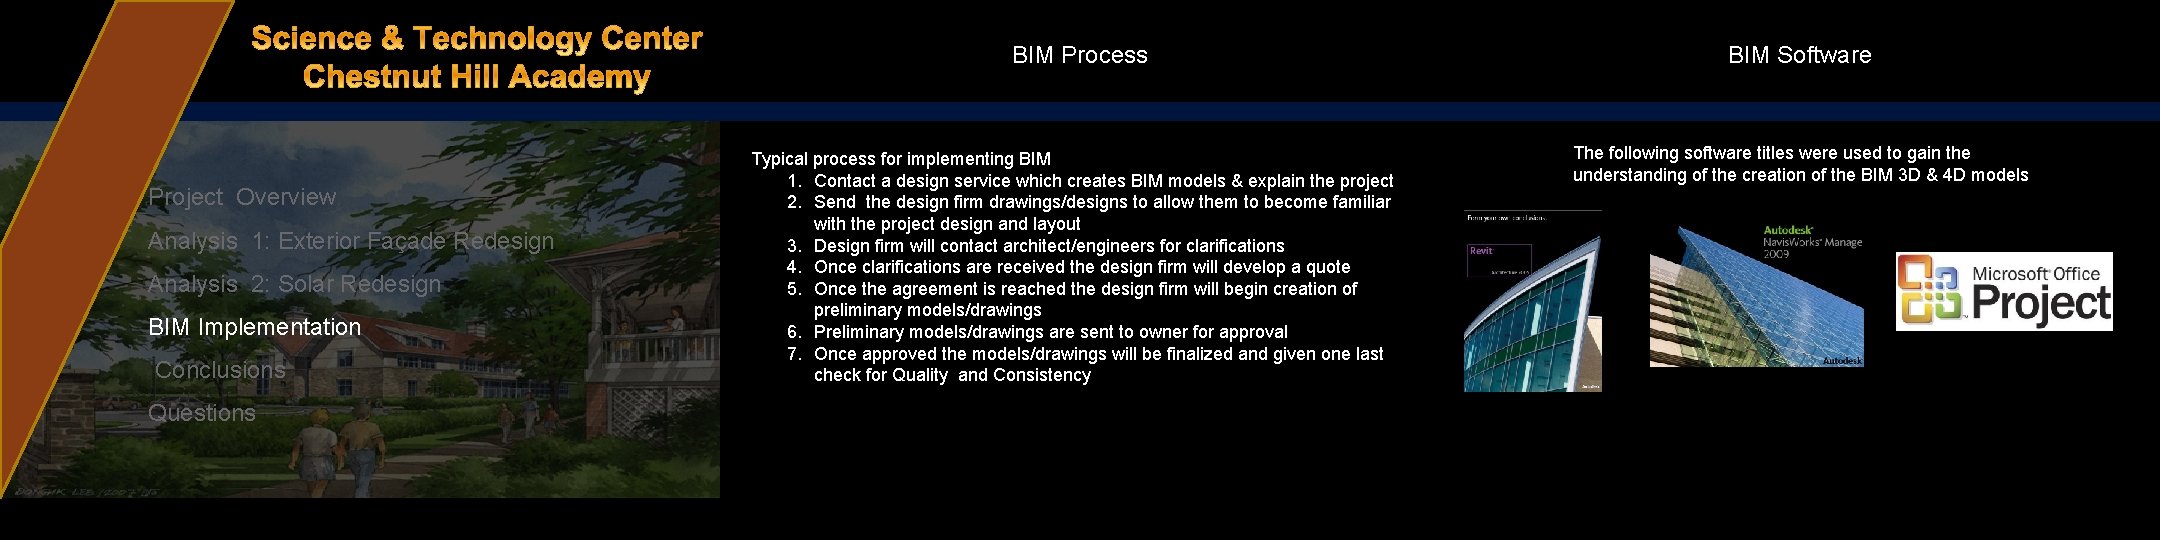 BIM Process Project Overview Analysis 1: Exterior Façade Redesign Analysis 2: Solar Redesign BIM